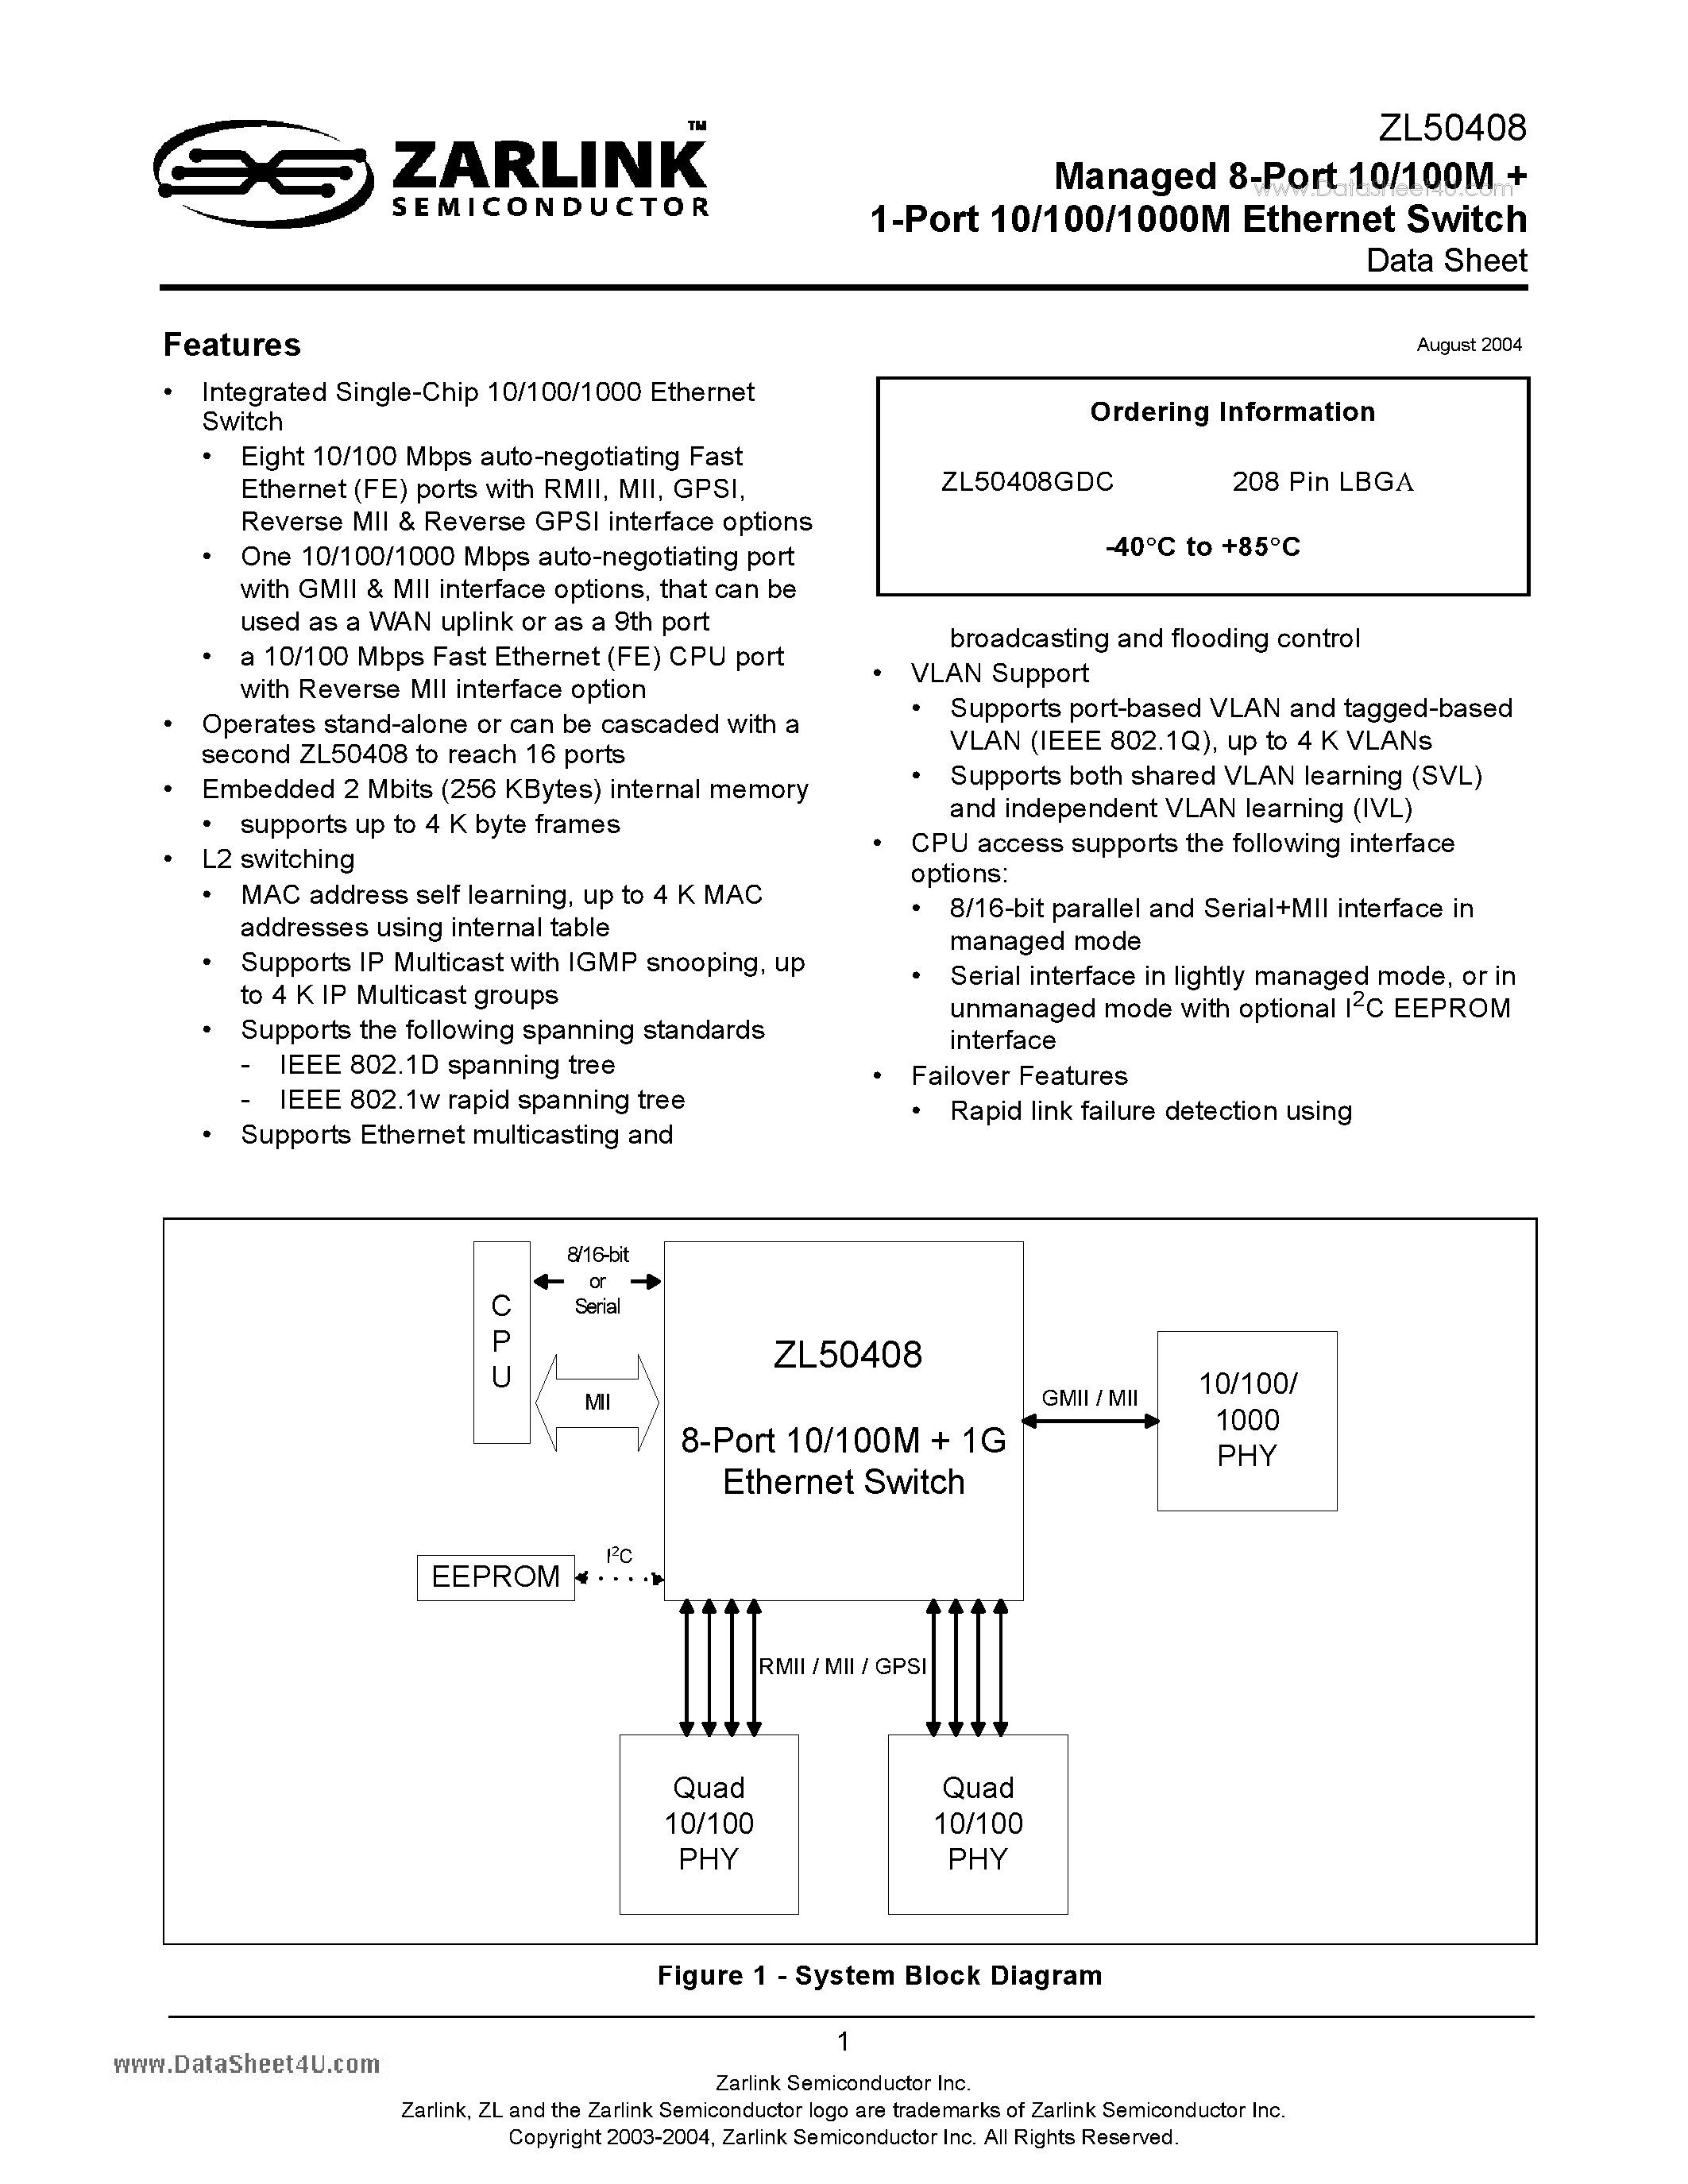 Даташит ZL50408 - Managed 8-Port 10/100M 1-Port 10/100/1000M Ethernet Switch страница 1